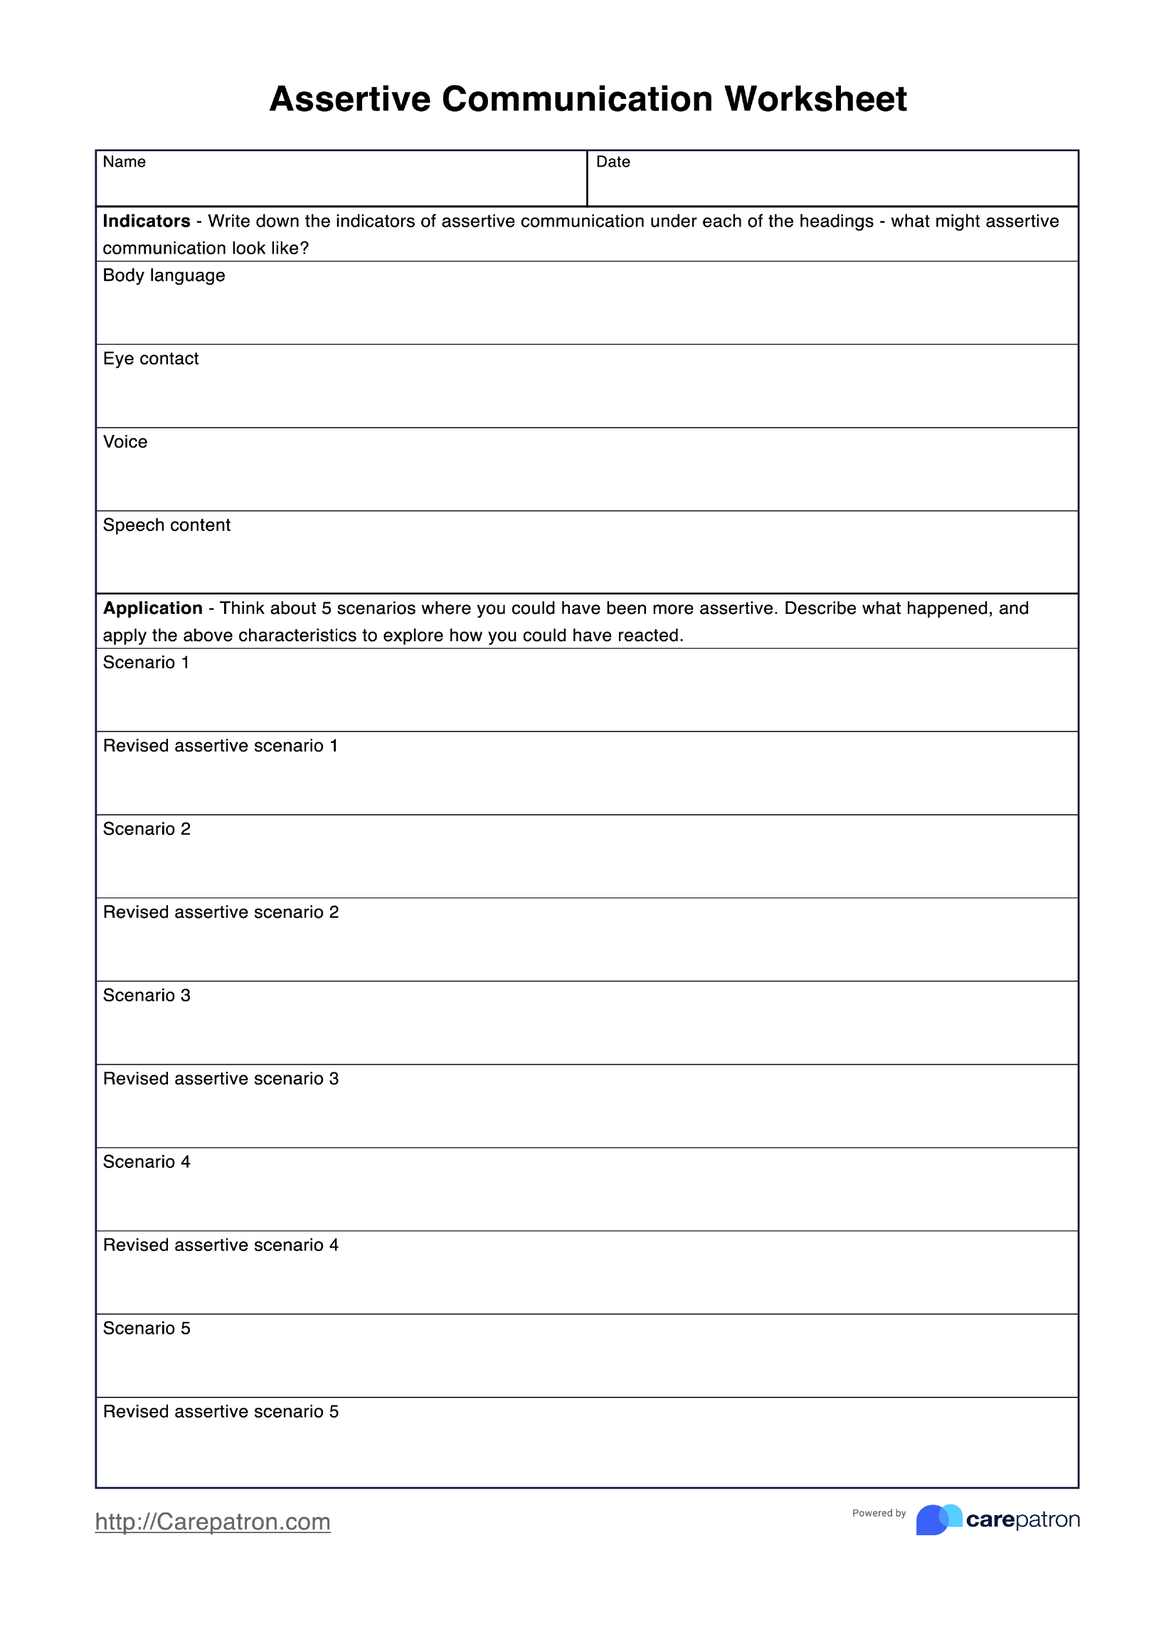 Assertive Communication Worksheets PDF Example